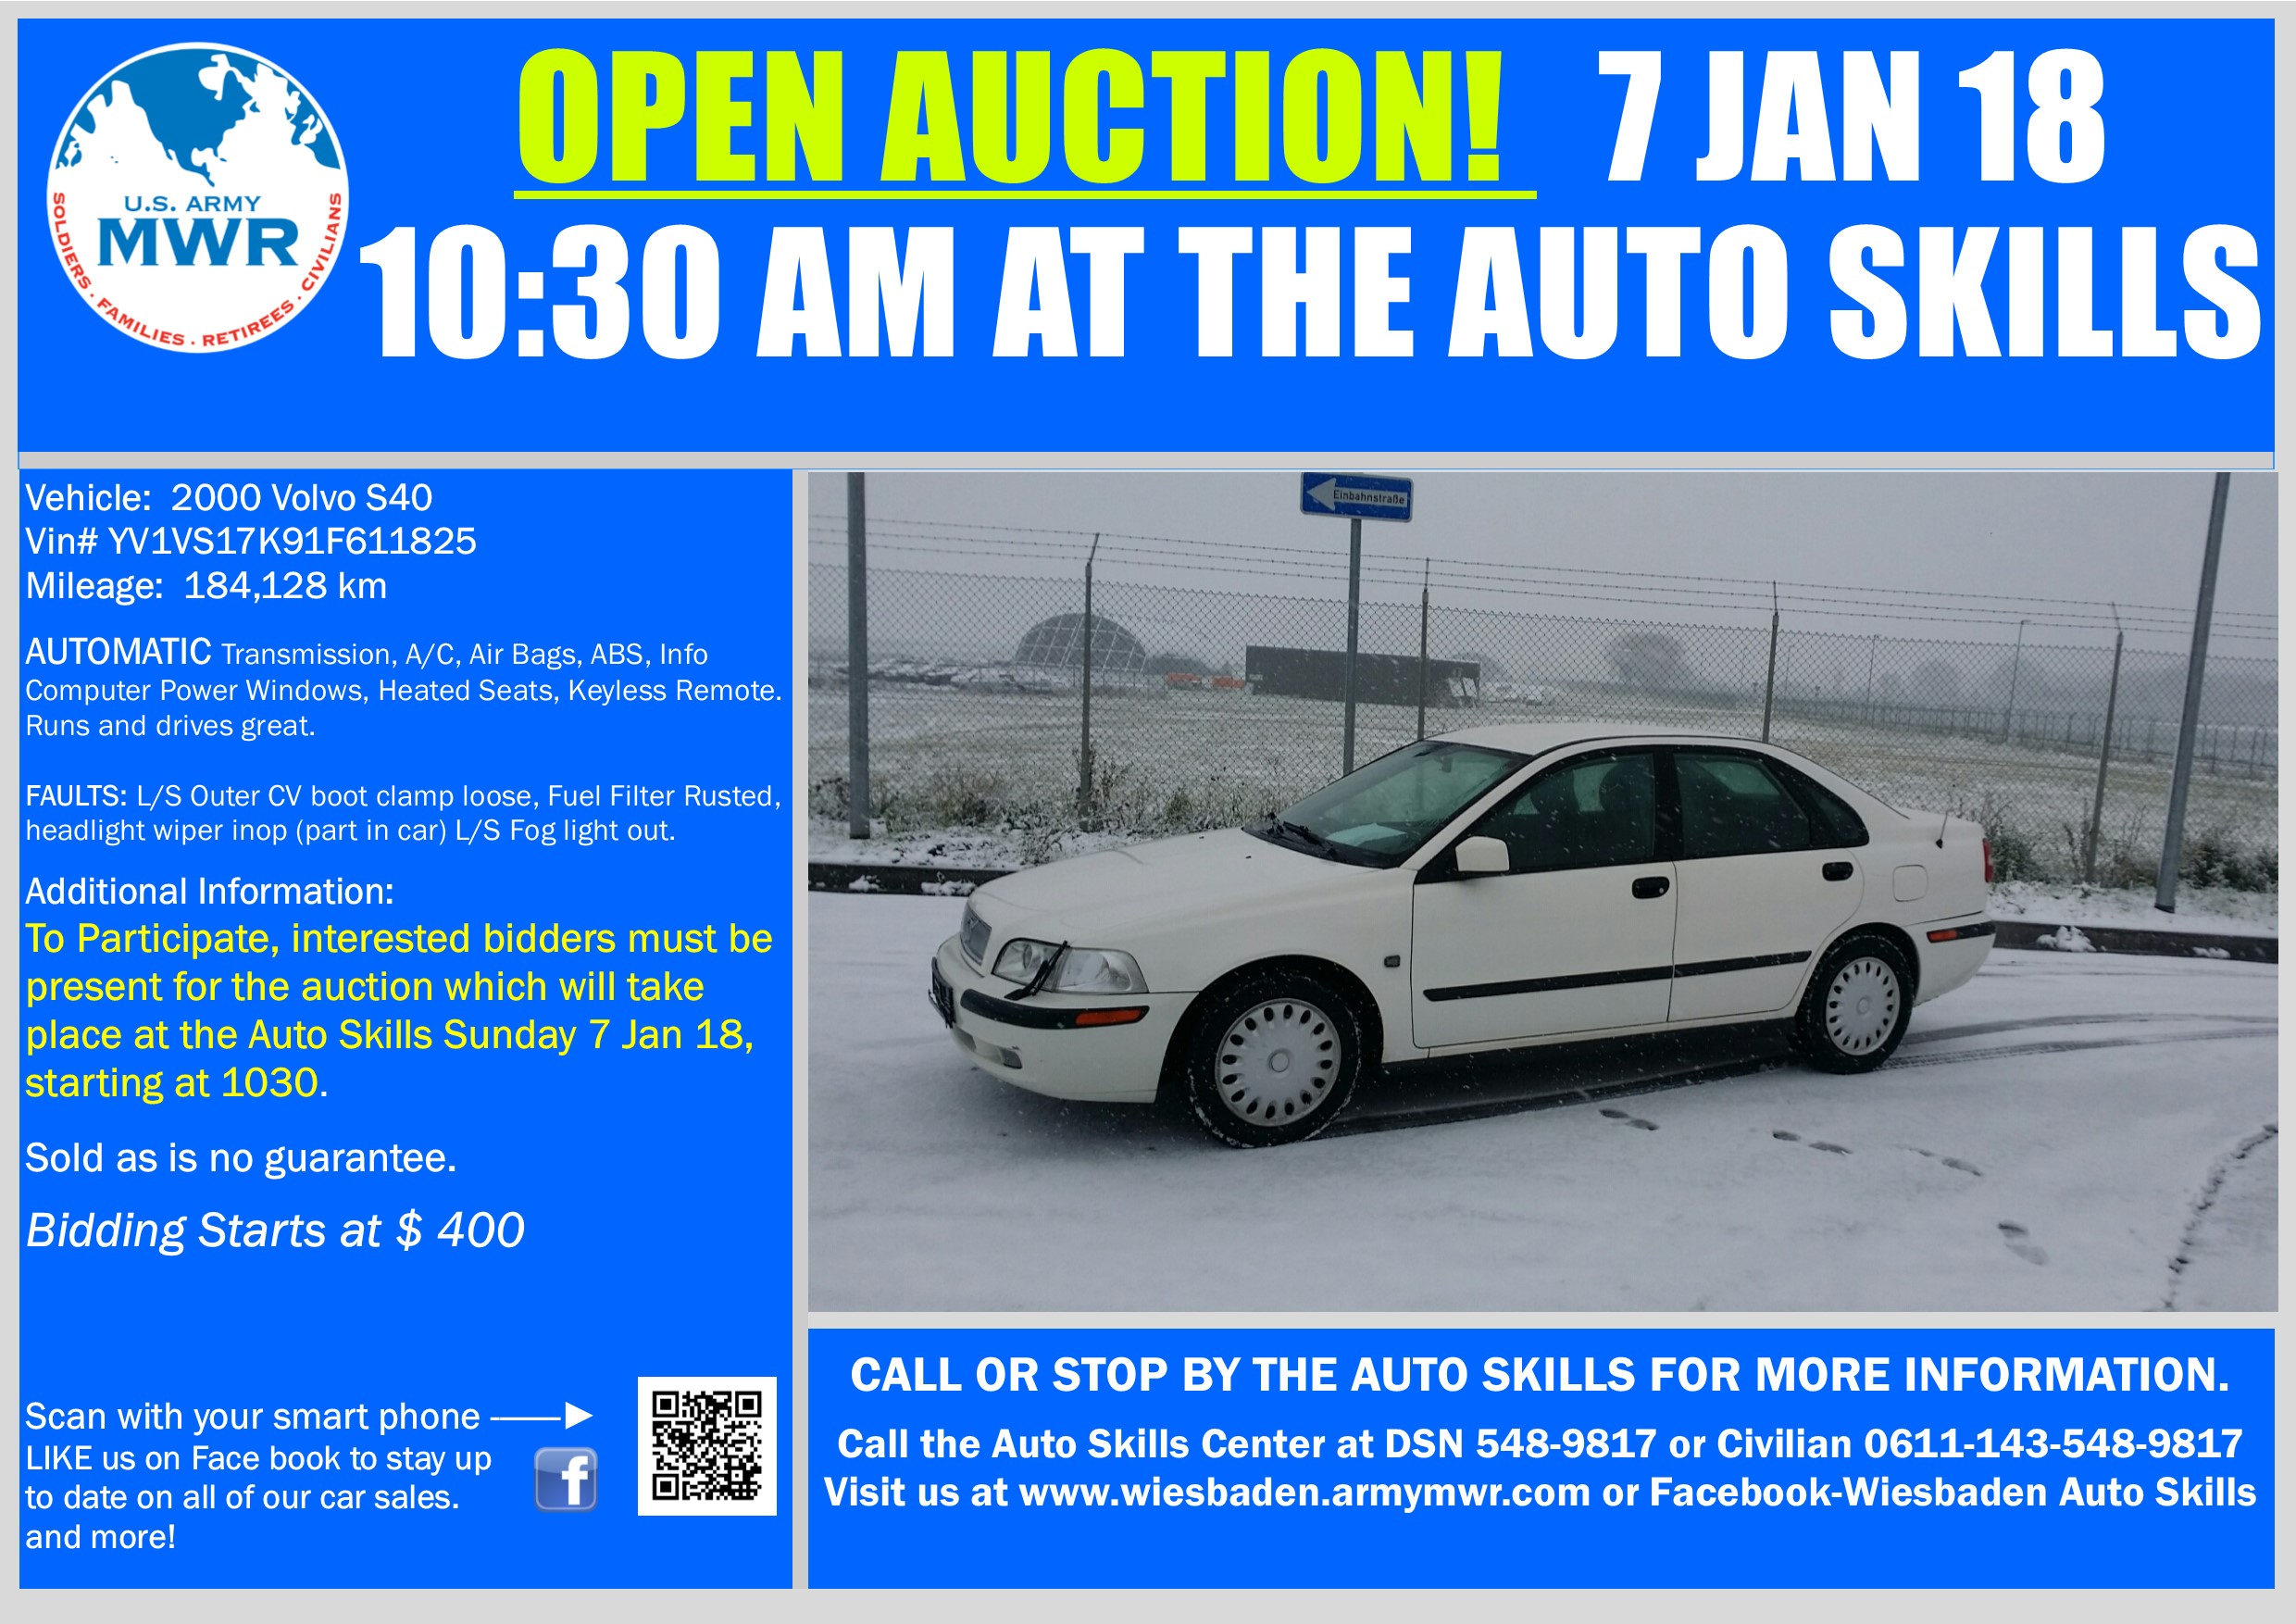 Sale_Volvo S40 7 Jan 18 Open Auction.jpg